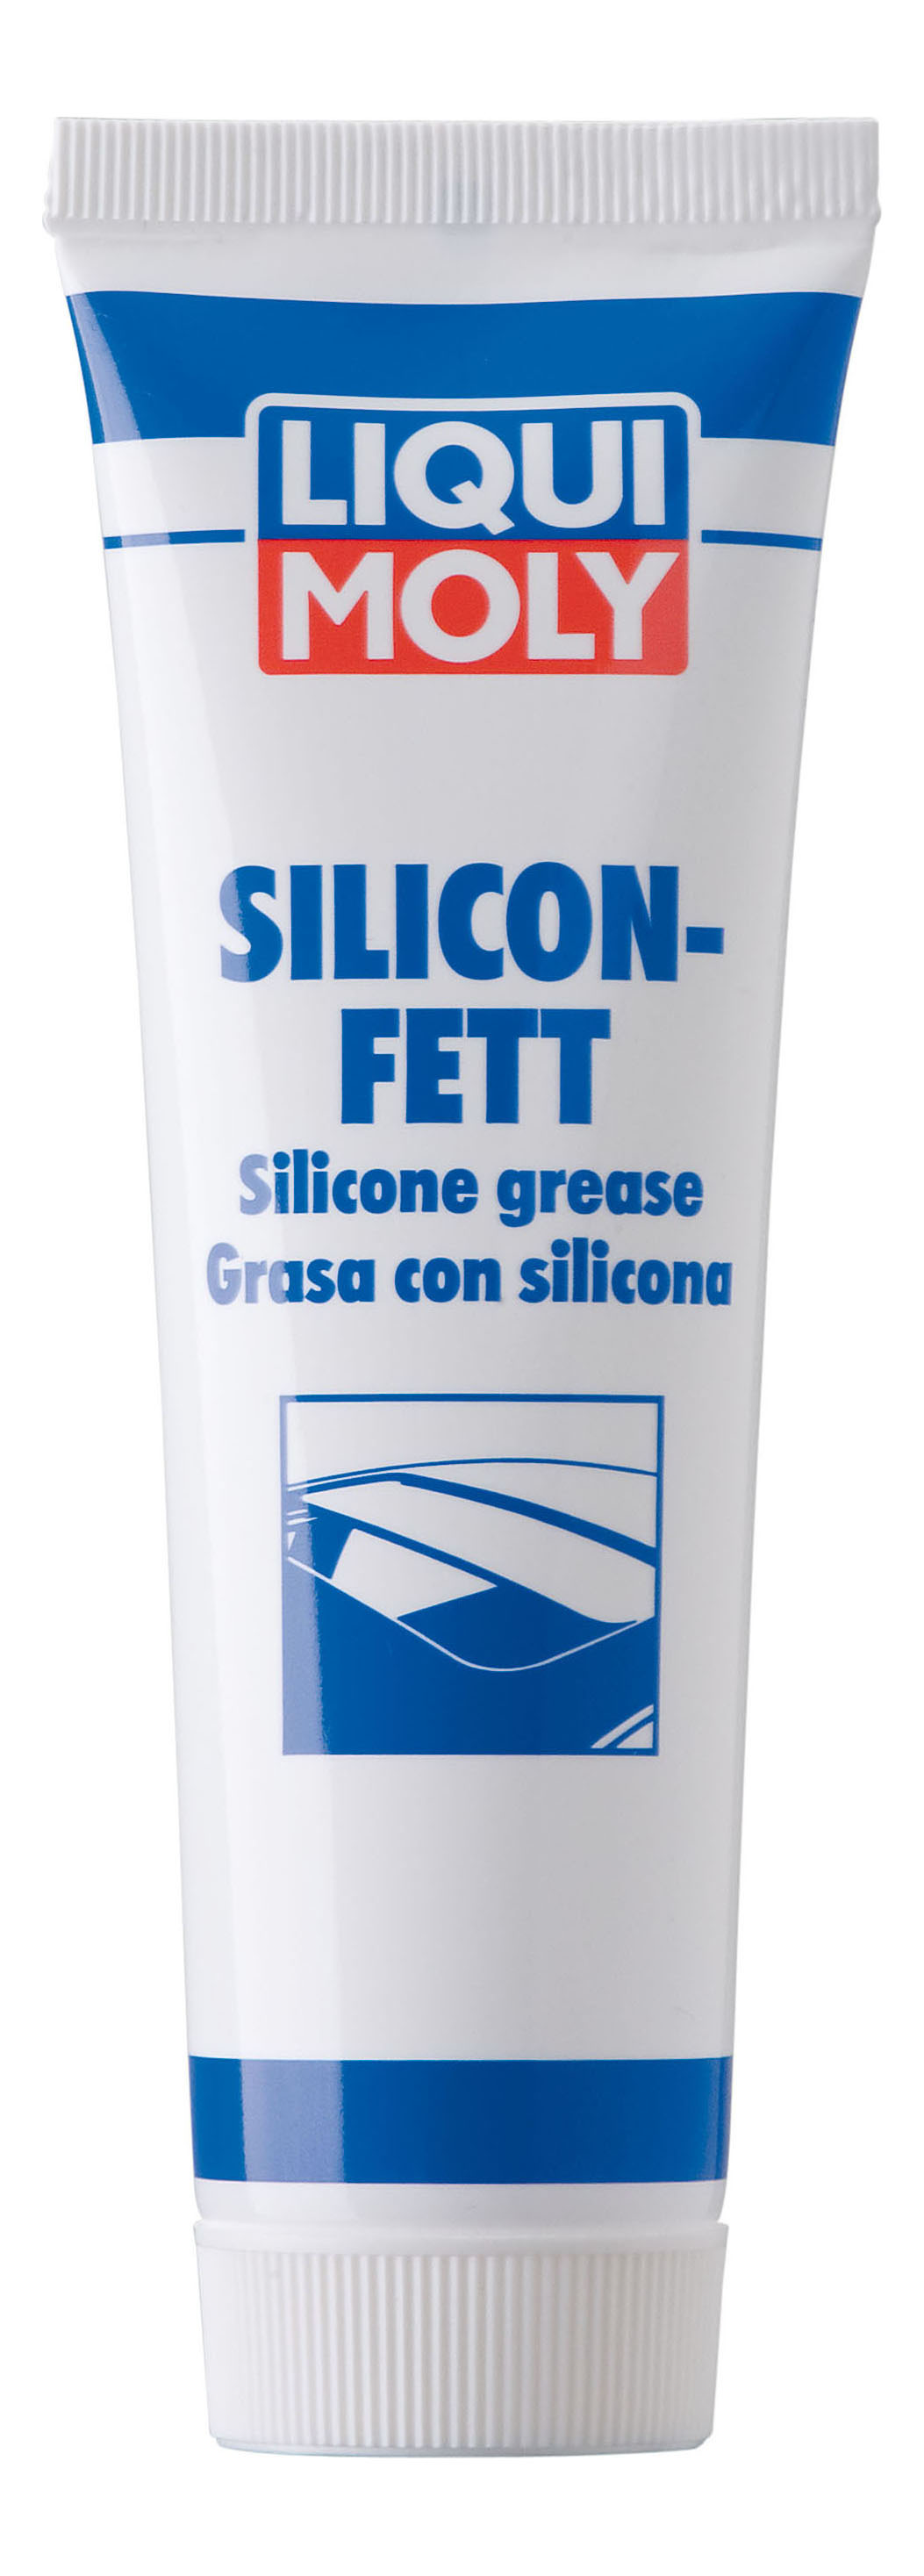 Силиконовая смазка LIQUI MOLY 3312 Silicon-Fett 100 гр